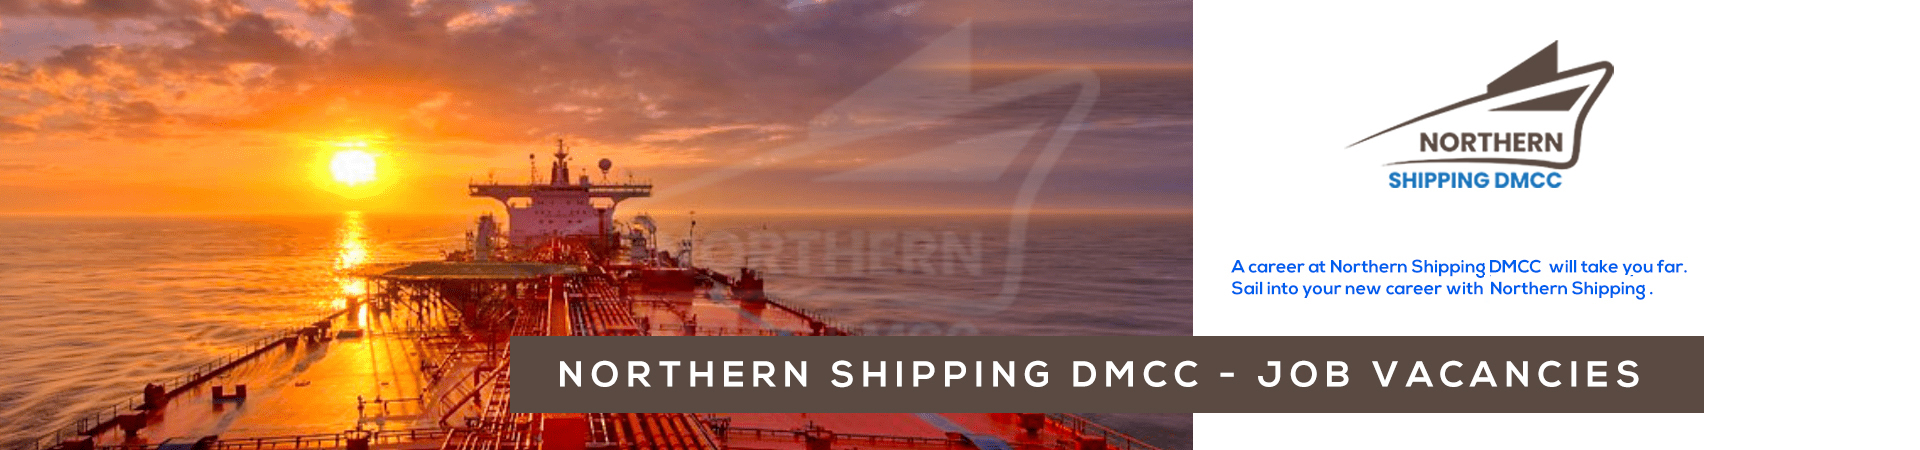 Northern Shipping DMCC 